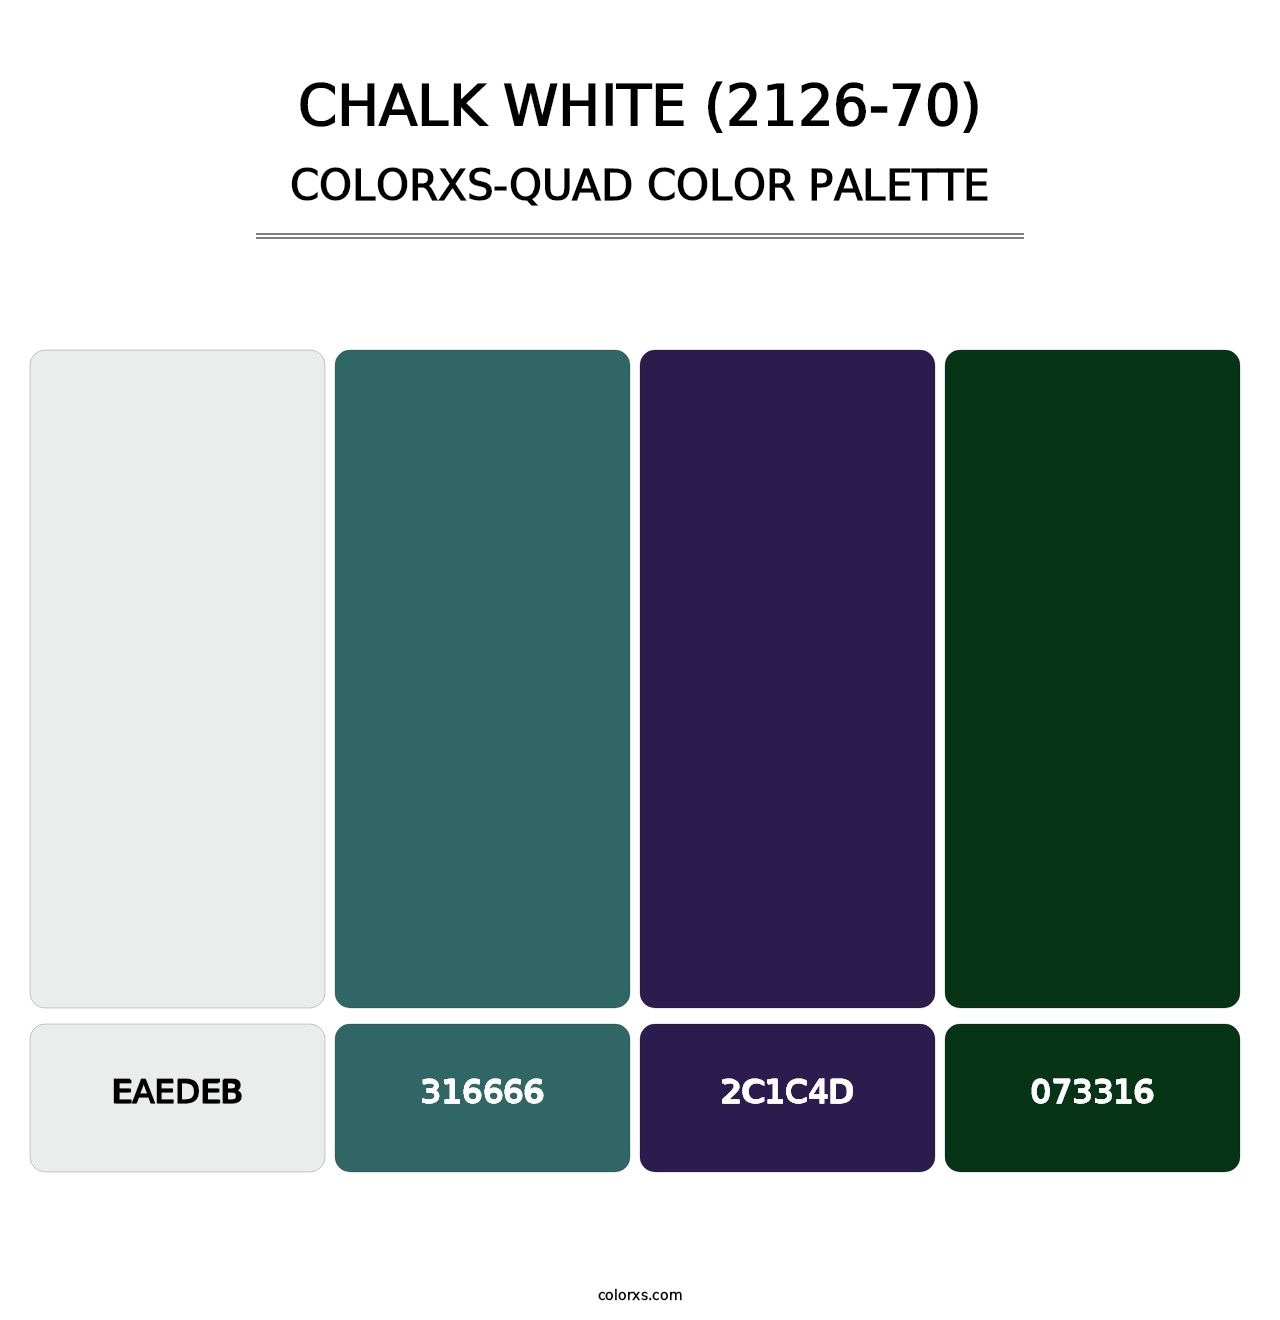 Chalk White (2126-70) - Colorxs Quad Palette